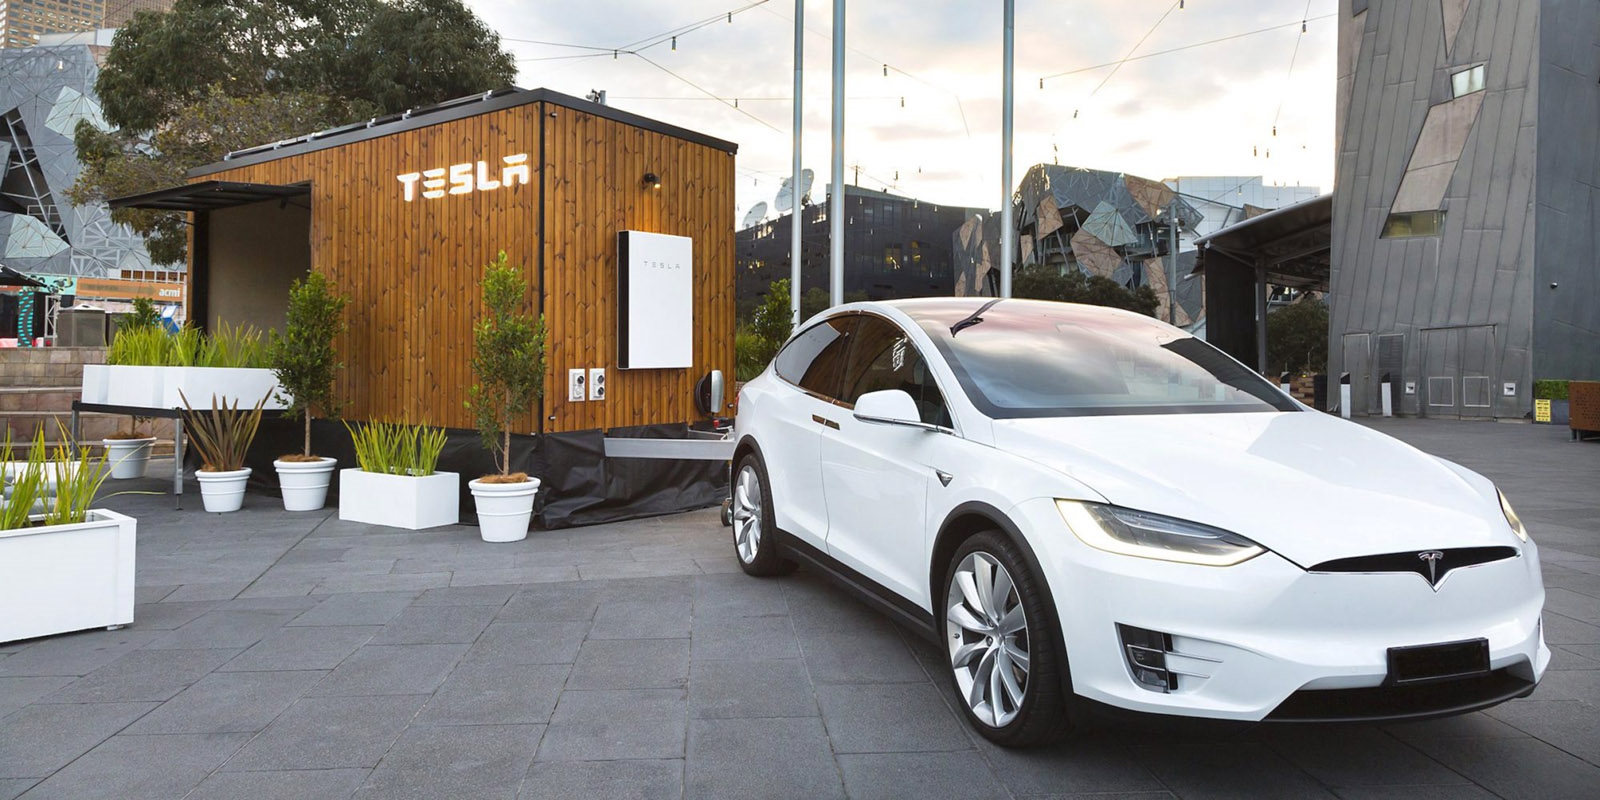 Tesla's 'Tiny House' roadshow demystifies its energy tech | DeviceDaily.com